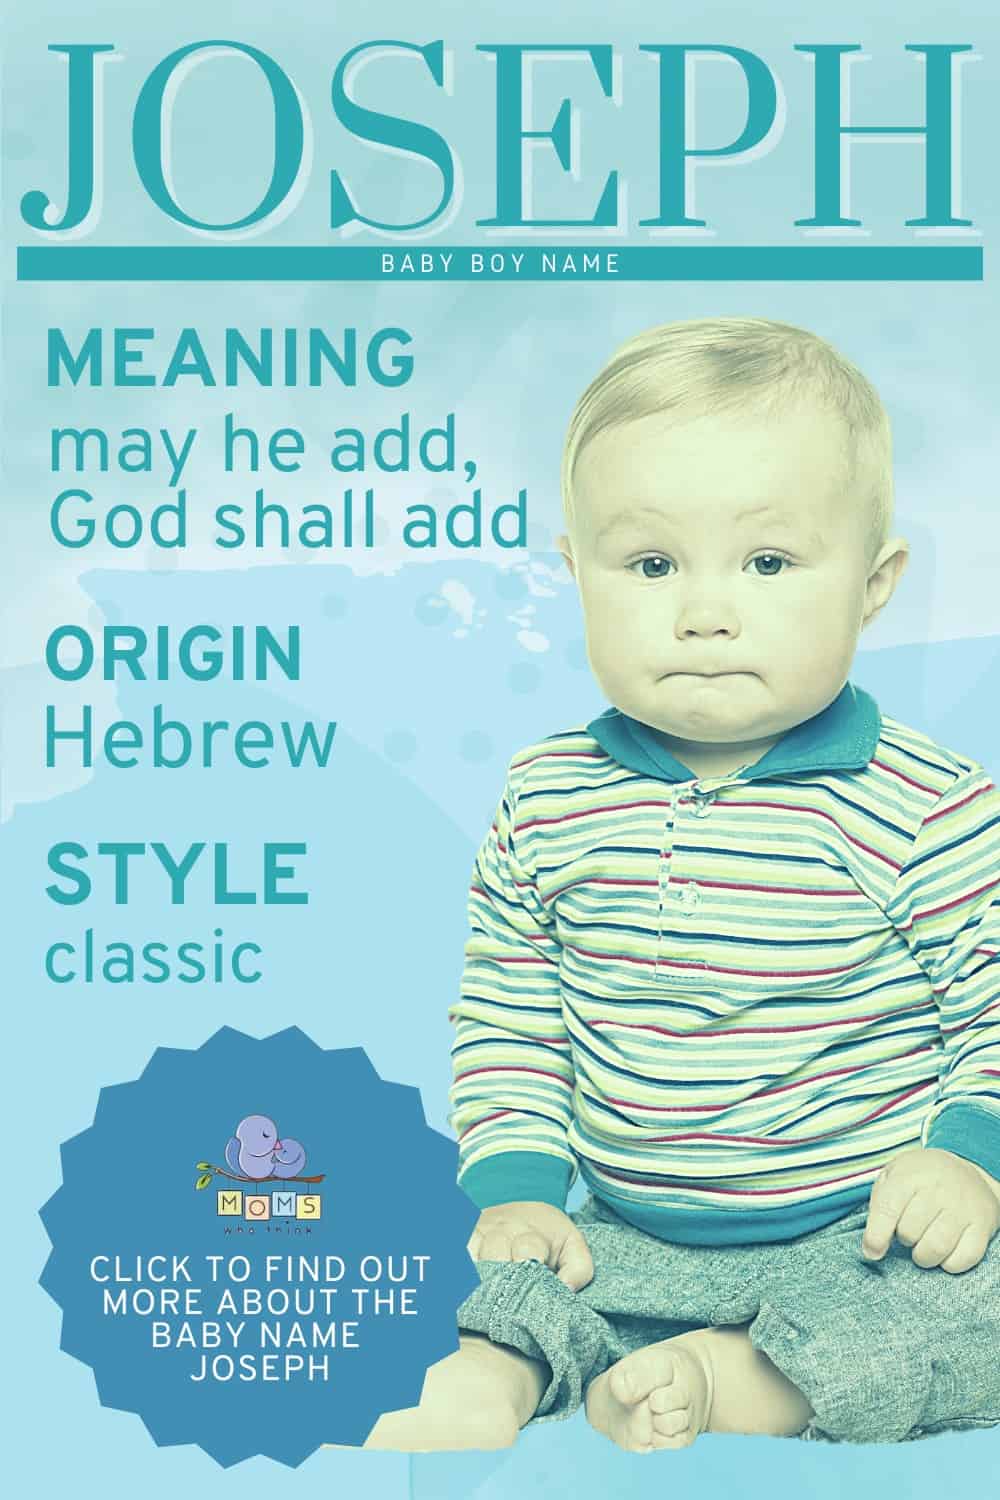 Baby name Joseph